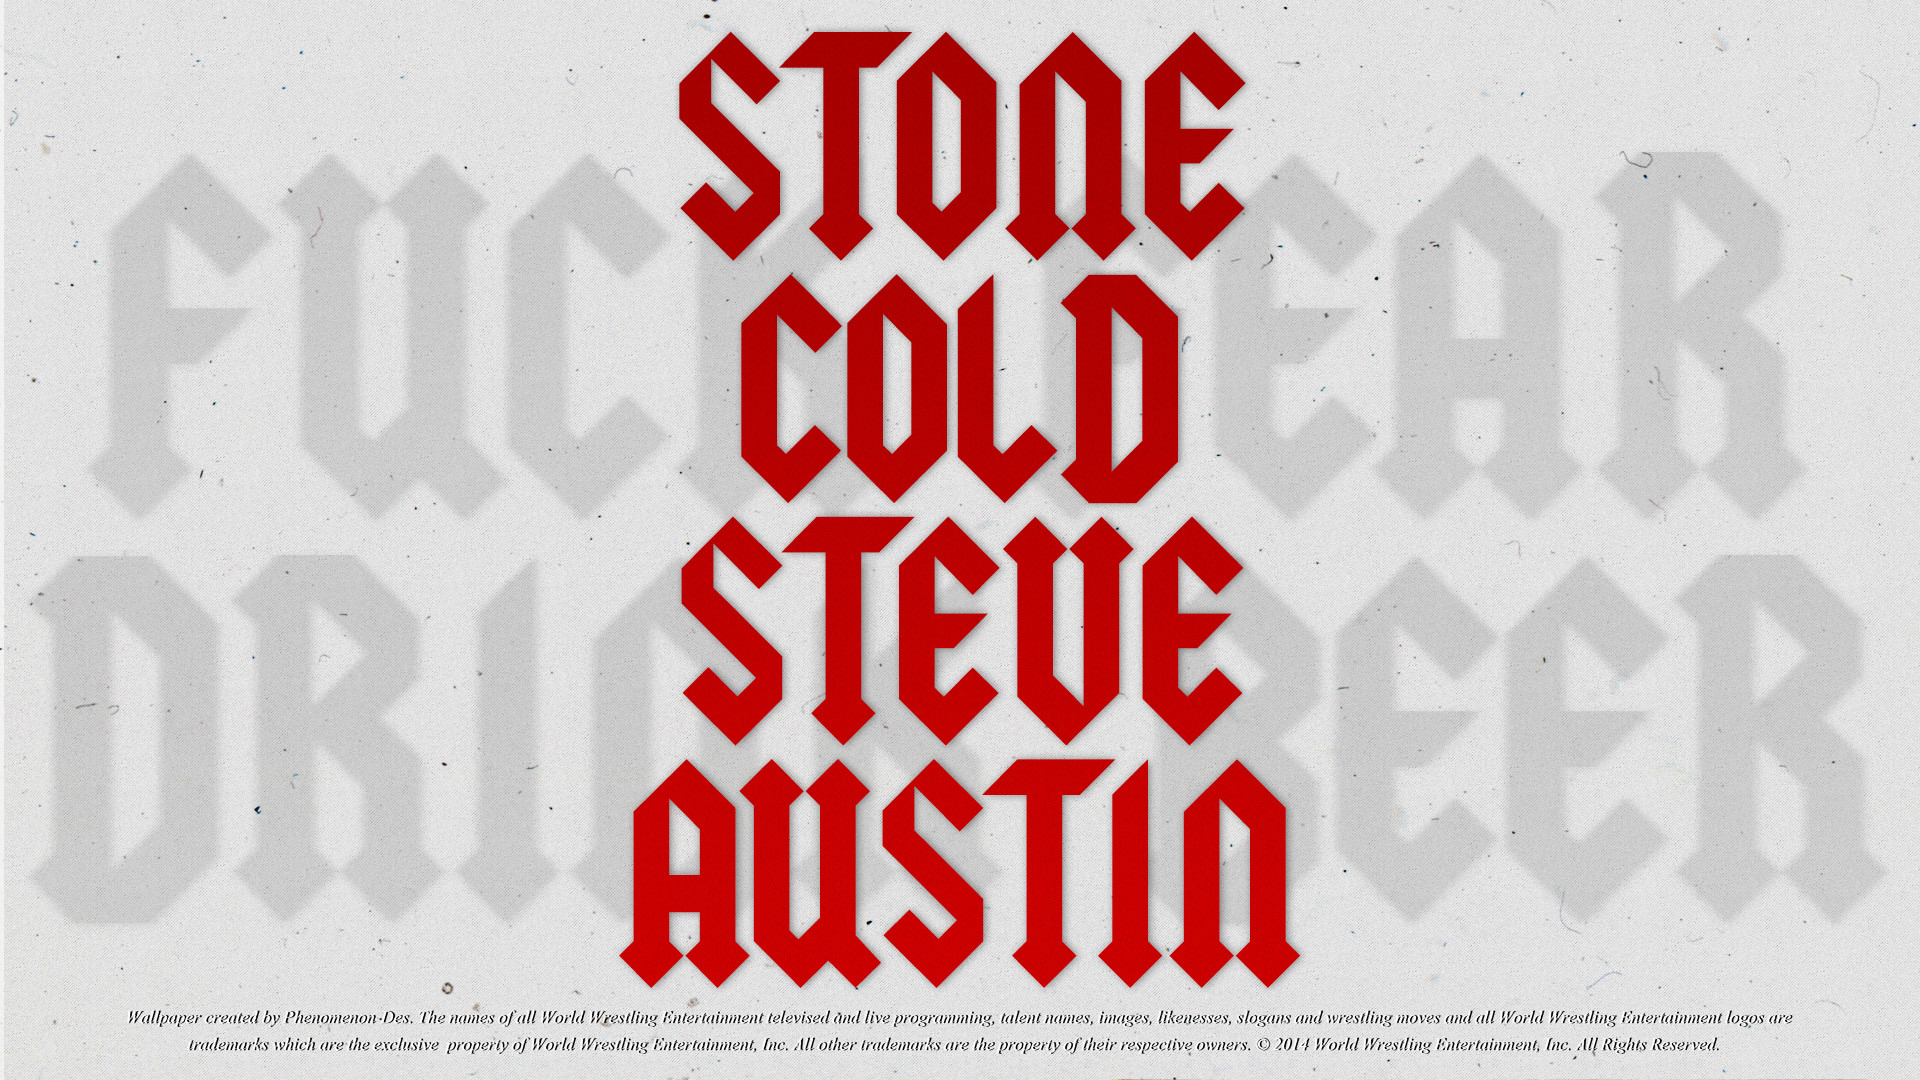 WWE Stone Cold Steve Austin Wallpaper by Phenomenon Des